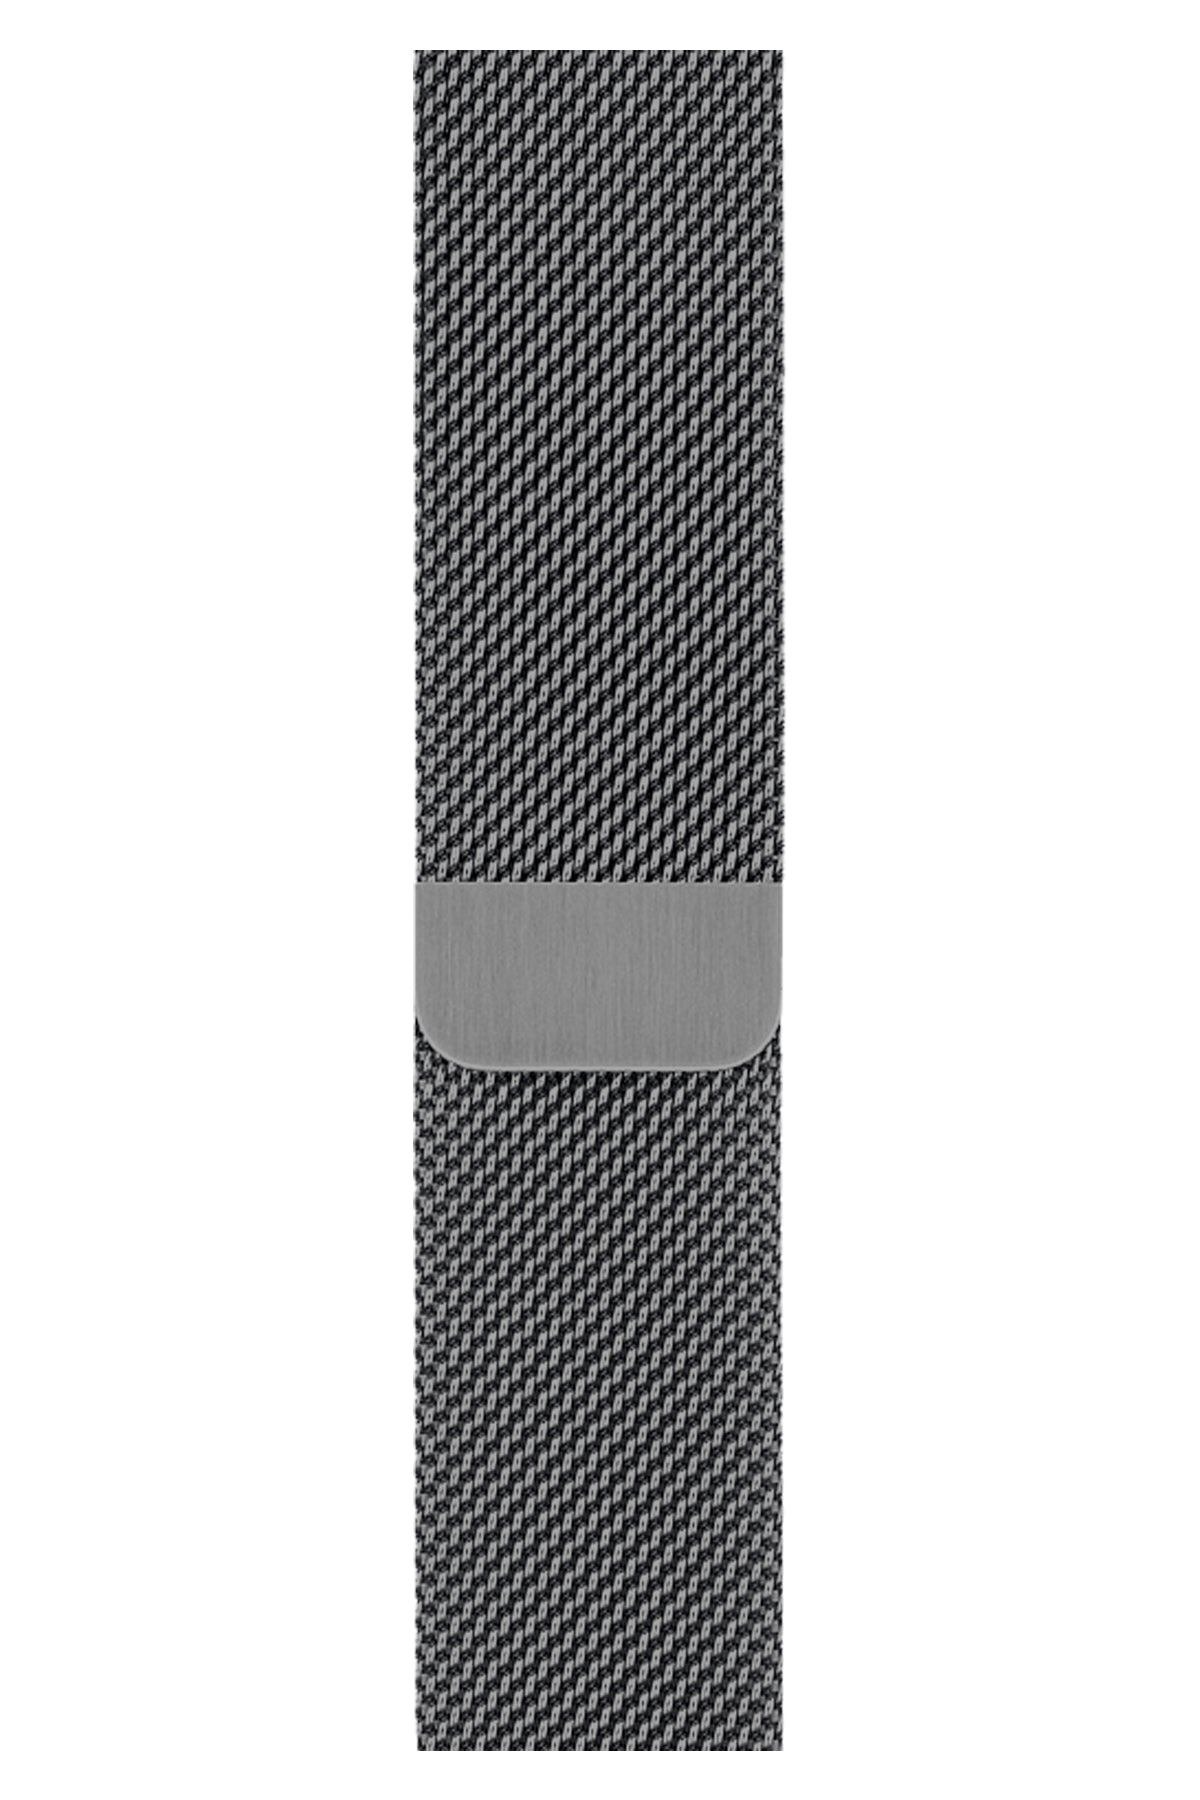 Apple Watch Compatible Steel Milano Loop Space Gray 